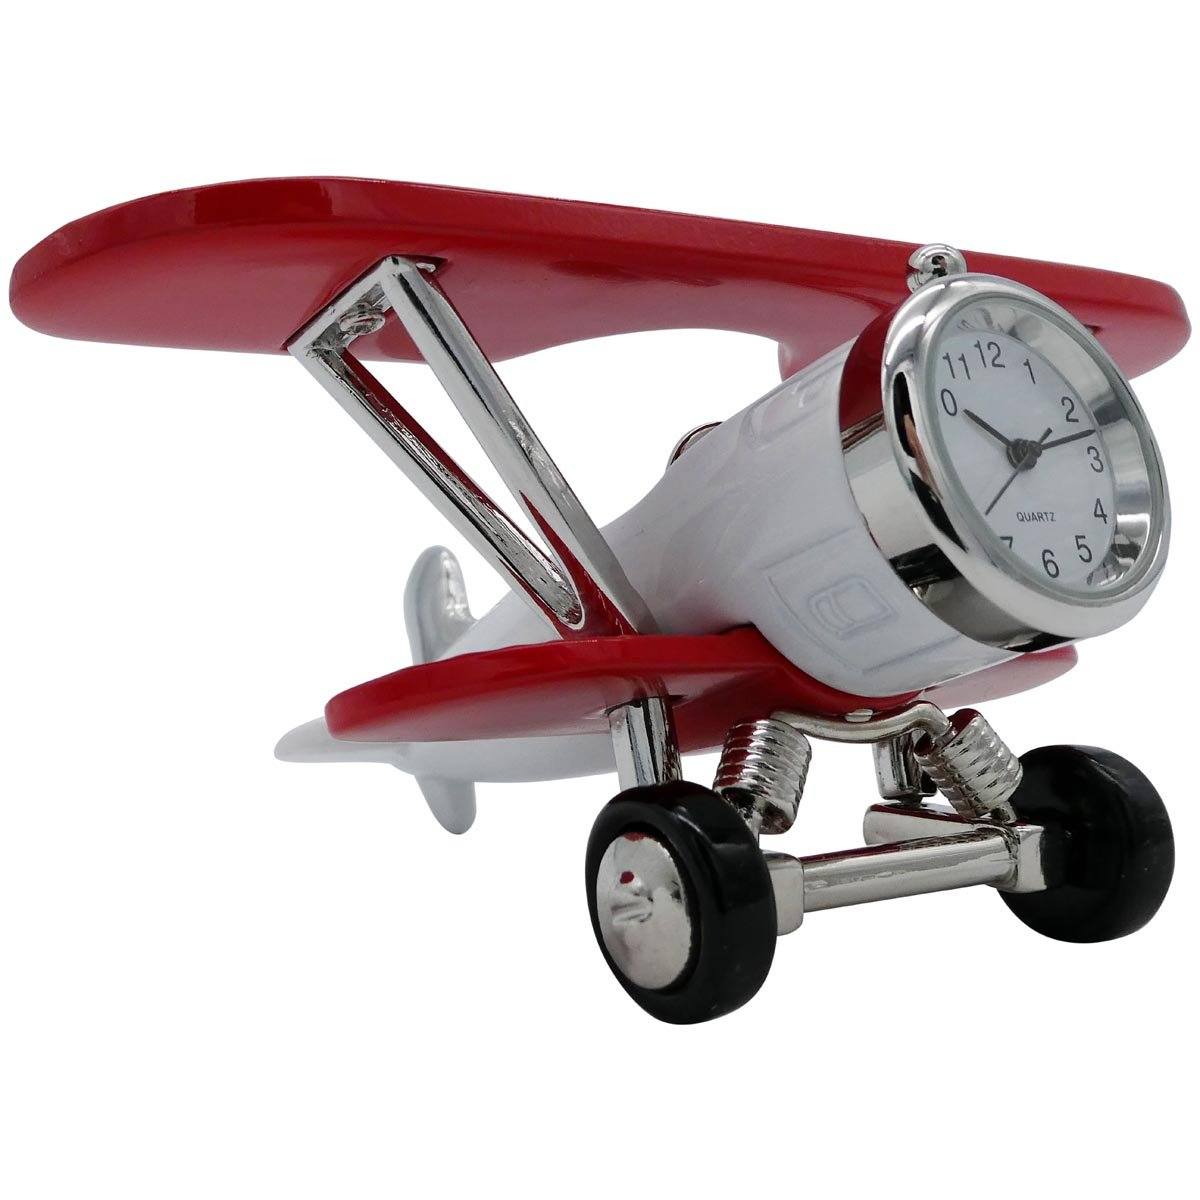 Pilot Toys White and Red Biplane Desk Clock